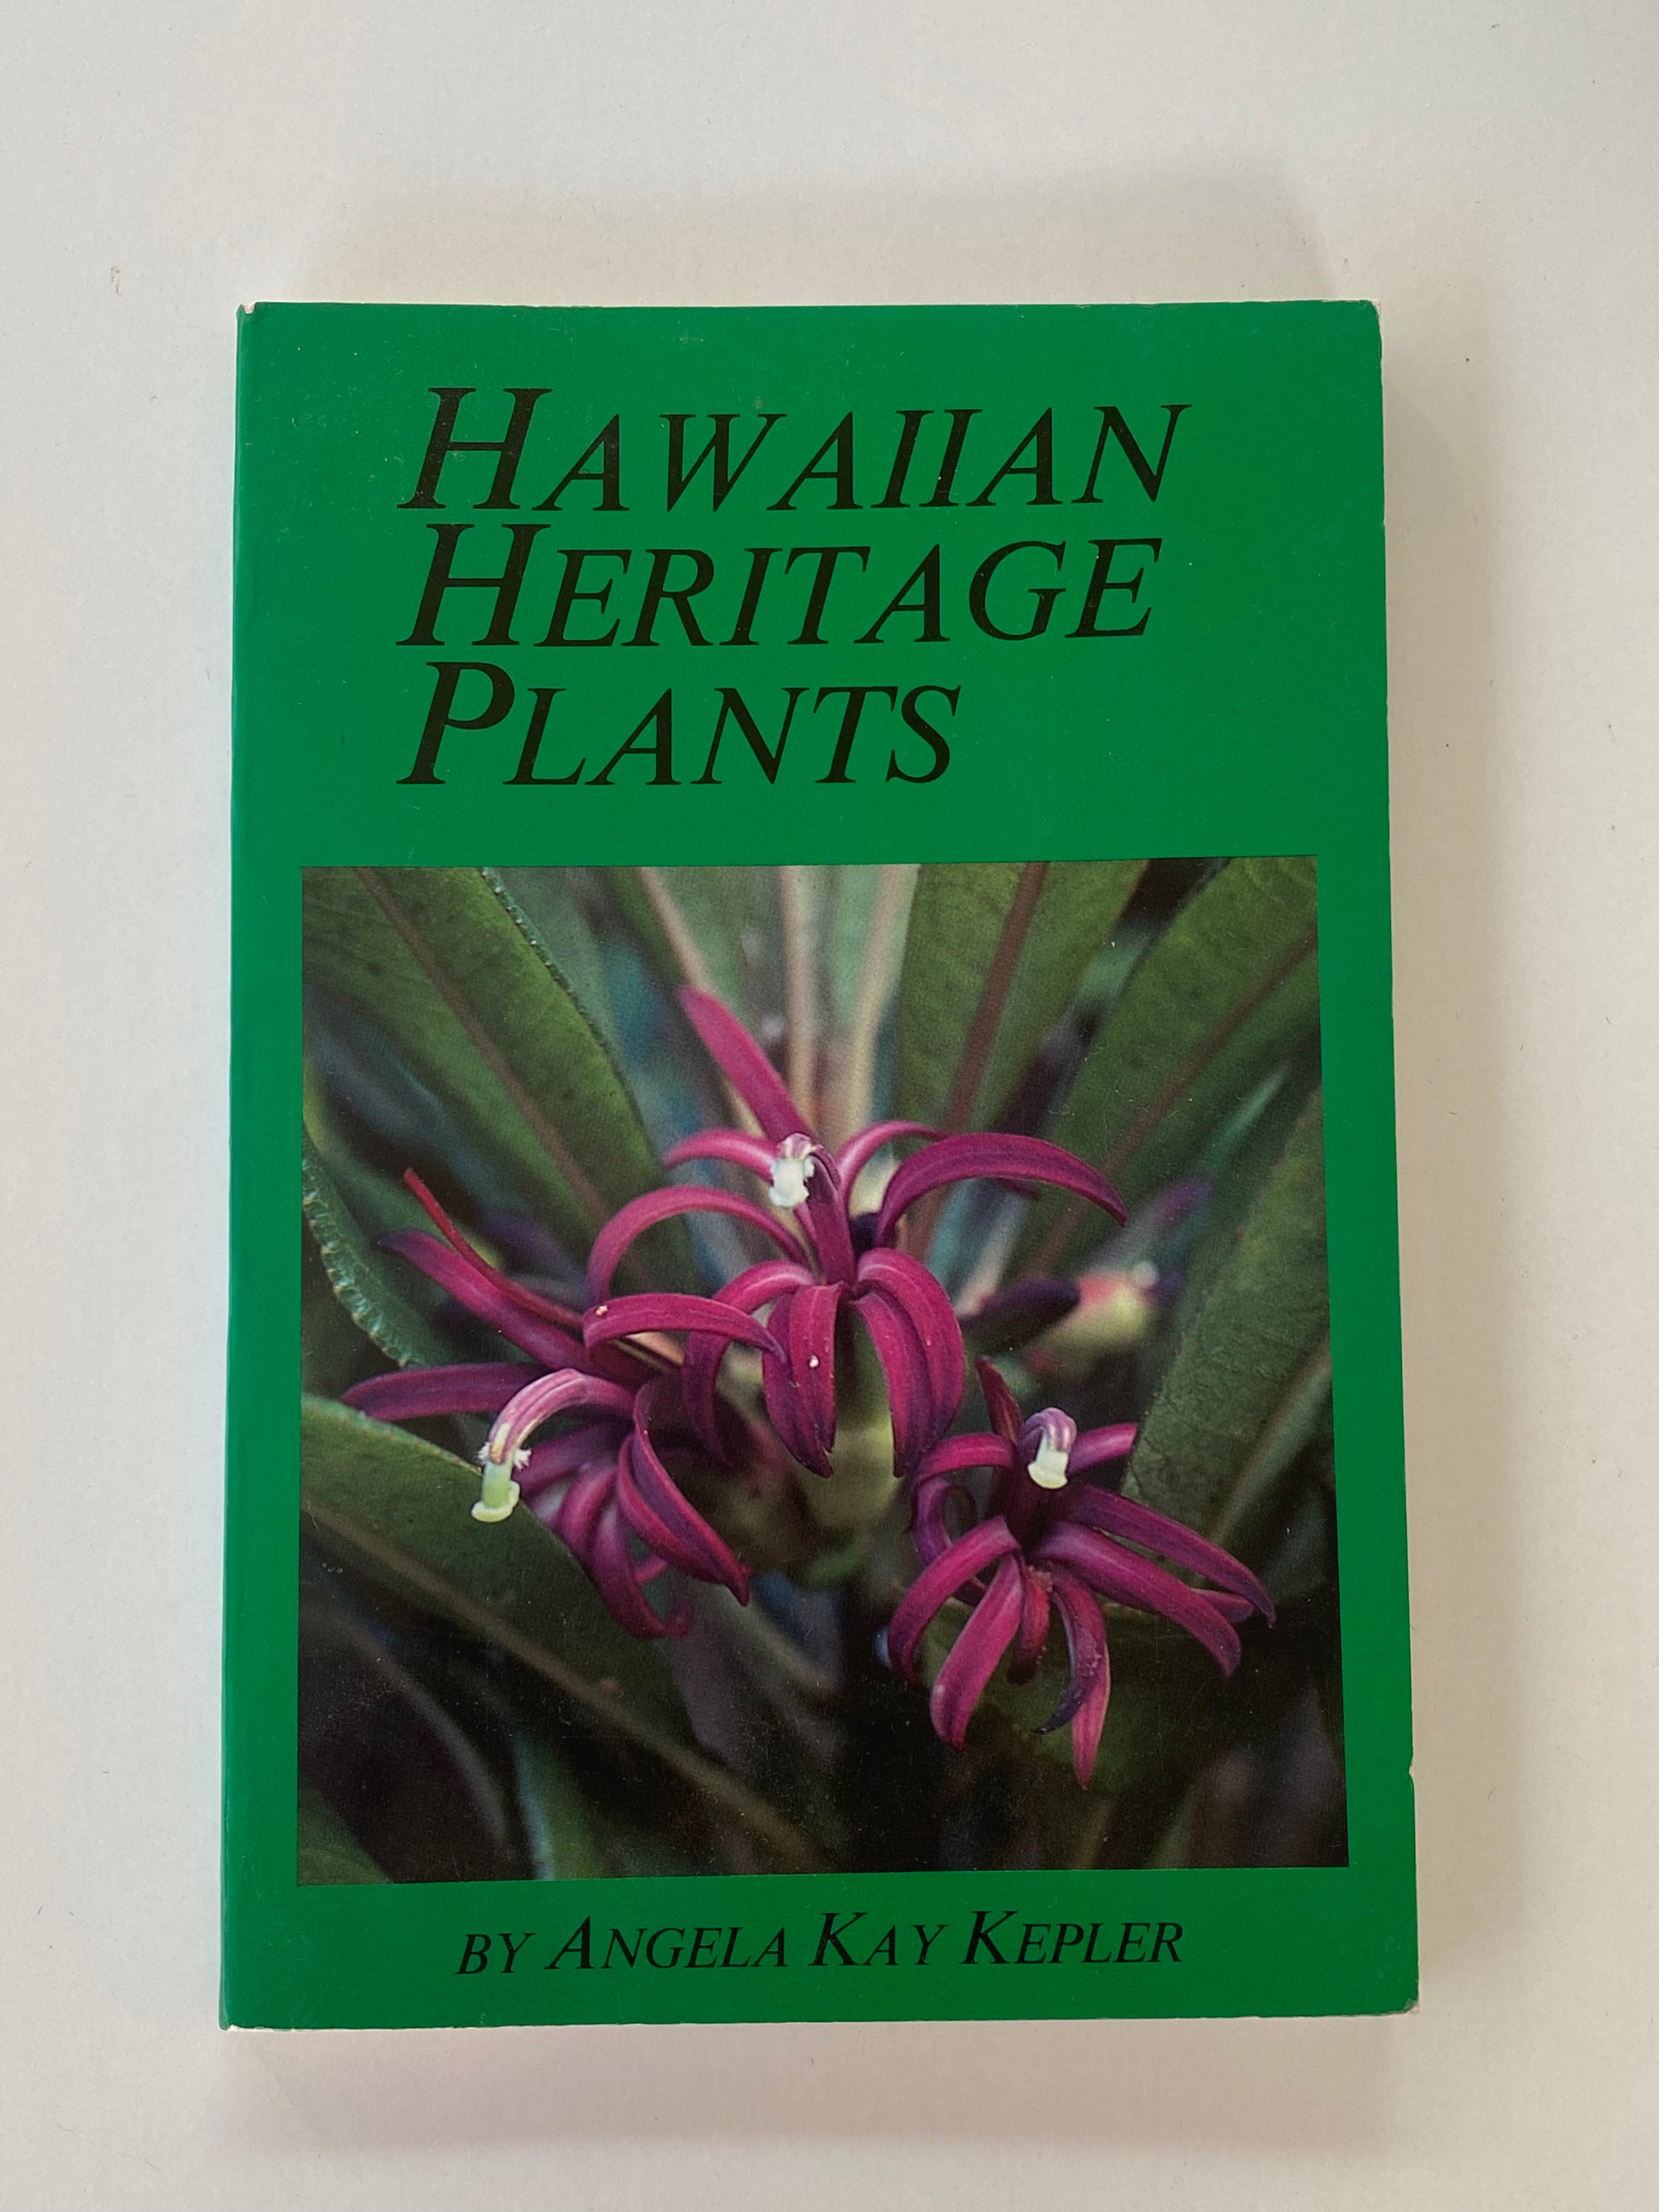 “Hawaiian Heritage Plants” Paperback book